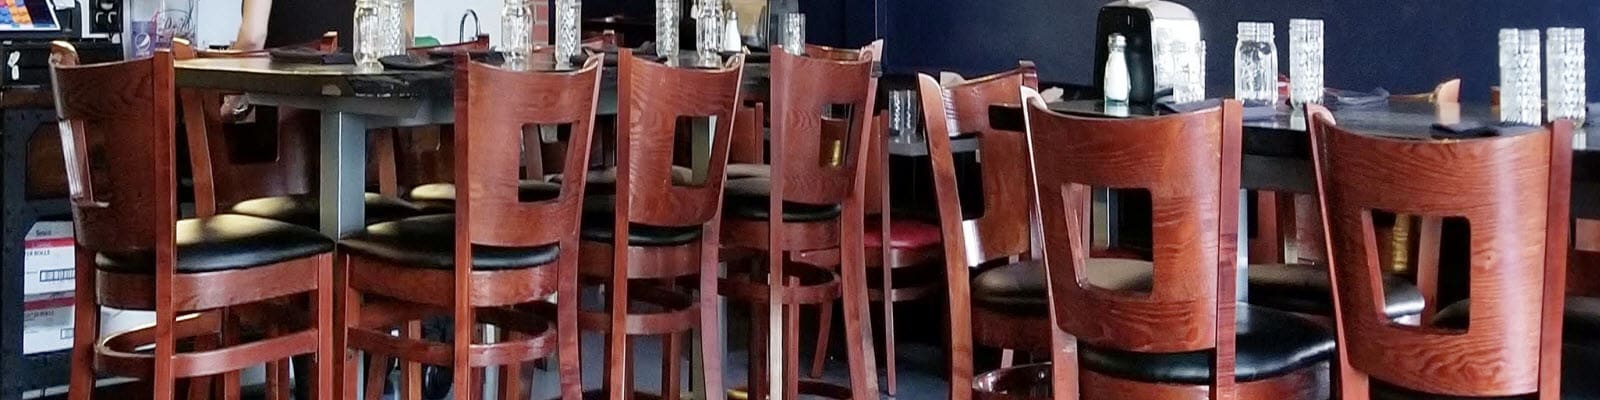 Wood restaurant chairs